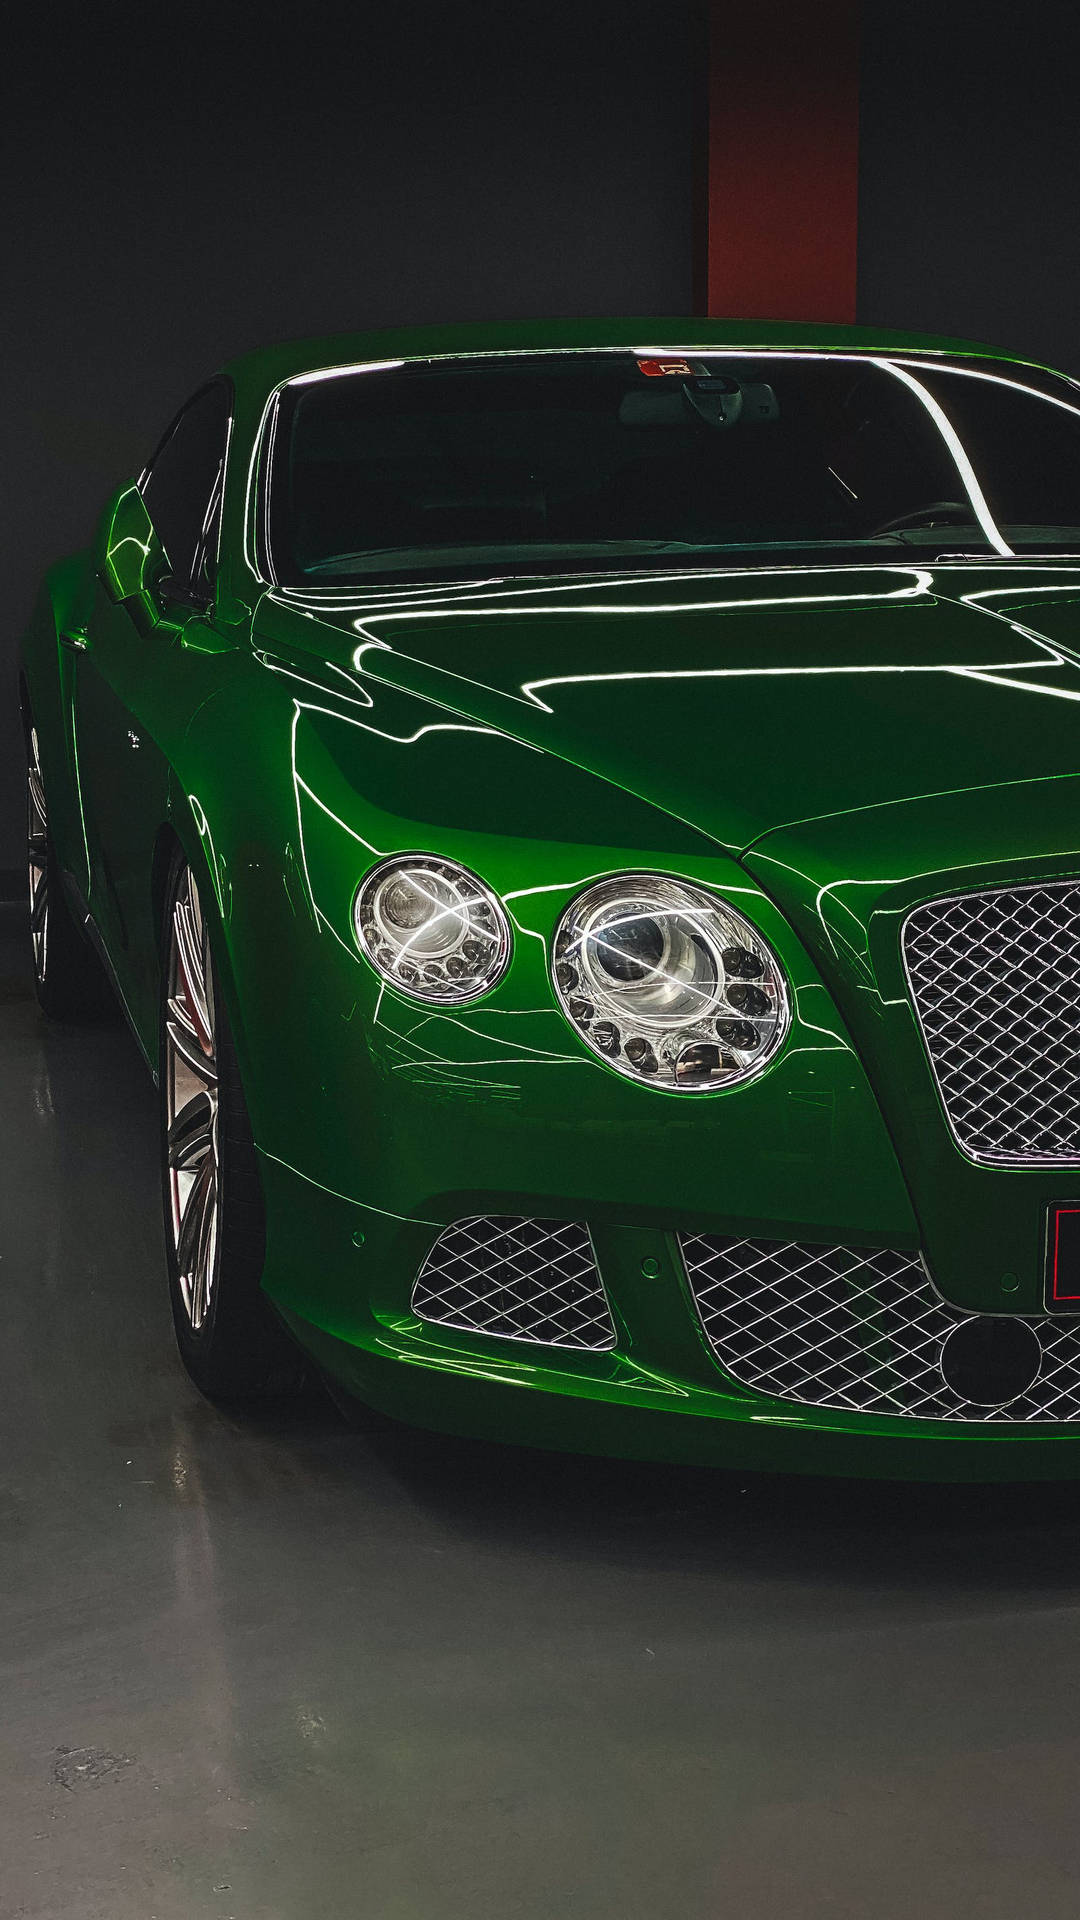 Grünersportwagen Bentley Hd Wallpaper